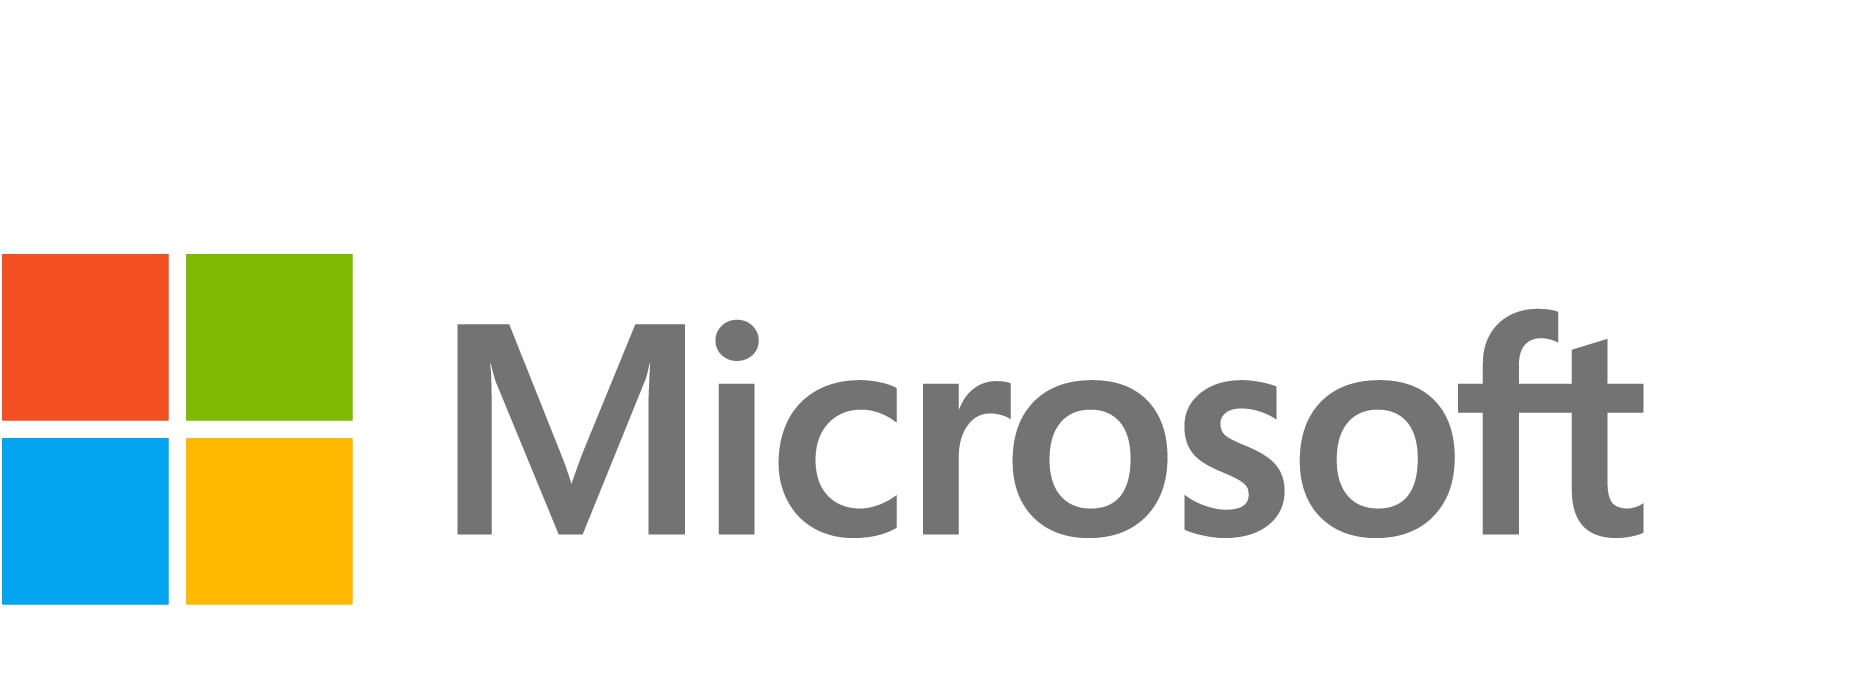 Microsoft Dynamics 365 for Operations, Enterprise edition - Sandbox Tier 5: